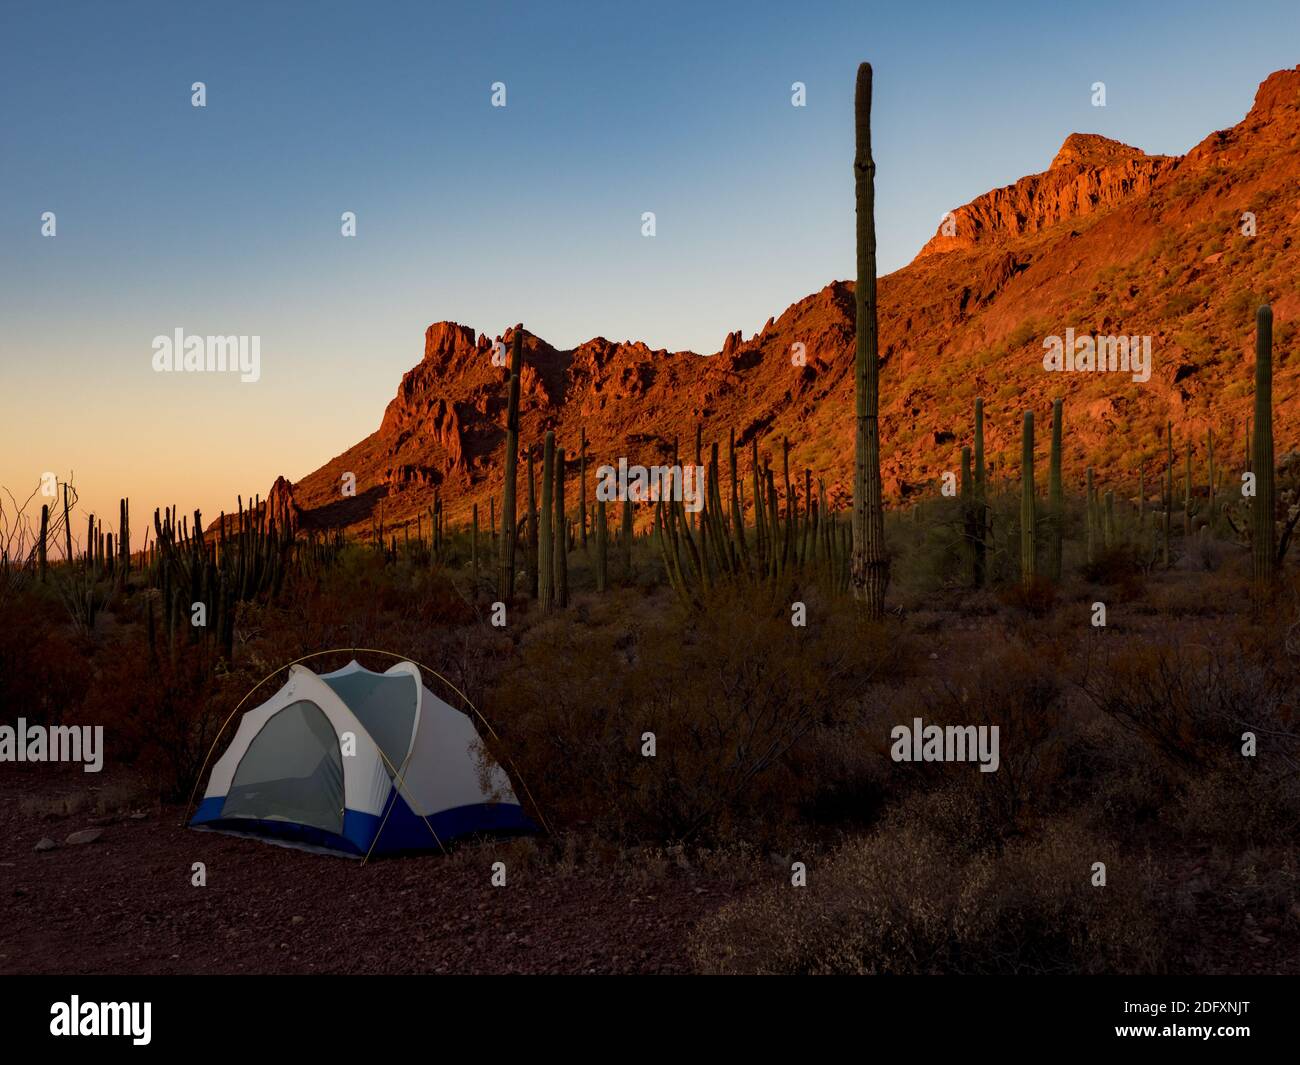 The beautiful desert at Alamo Canyon Campground in Organ Pipe Cactus National Monument, Arizona, USA Stock Photo